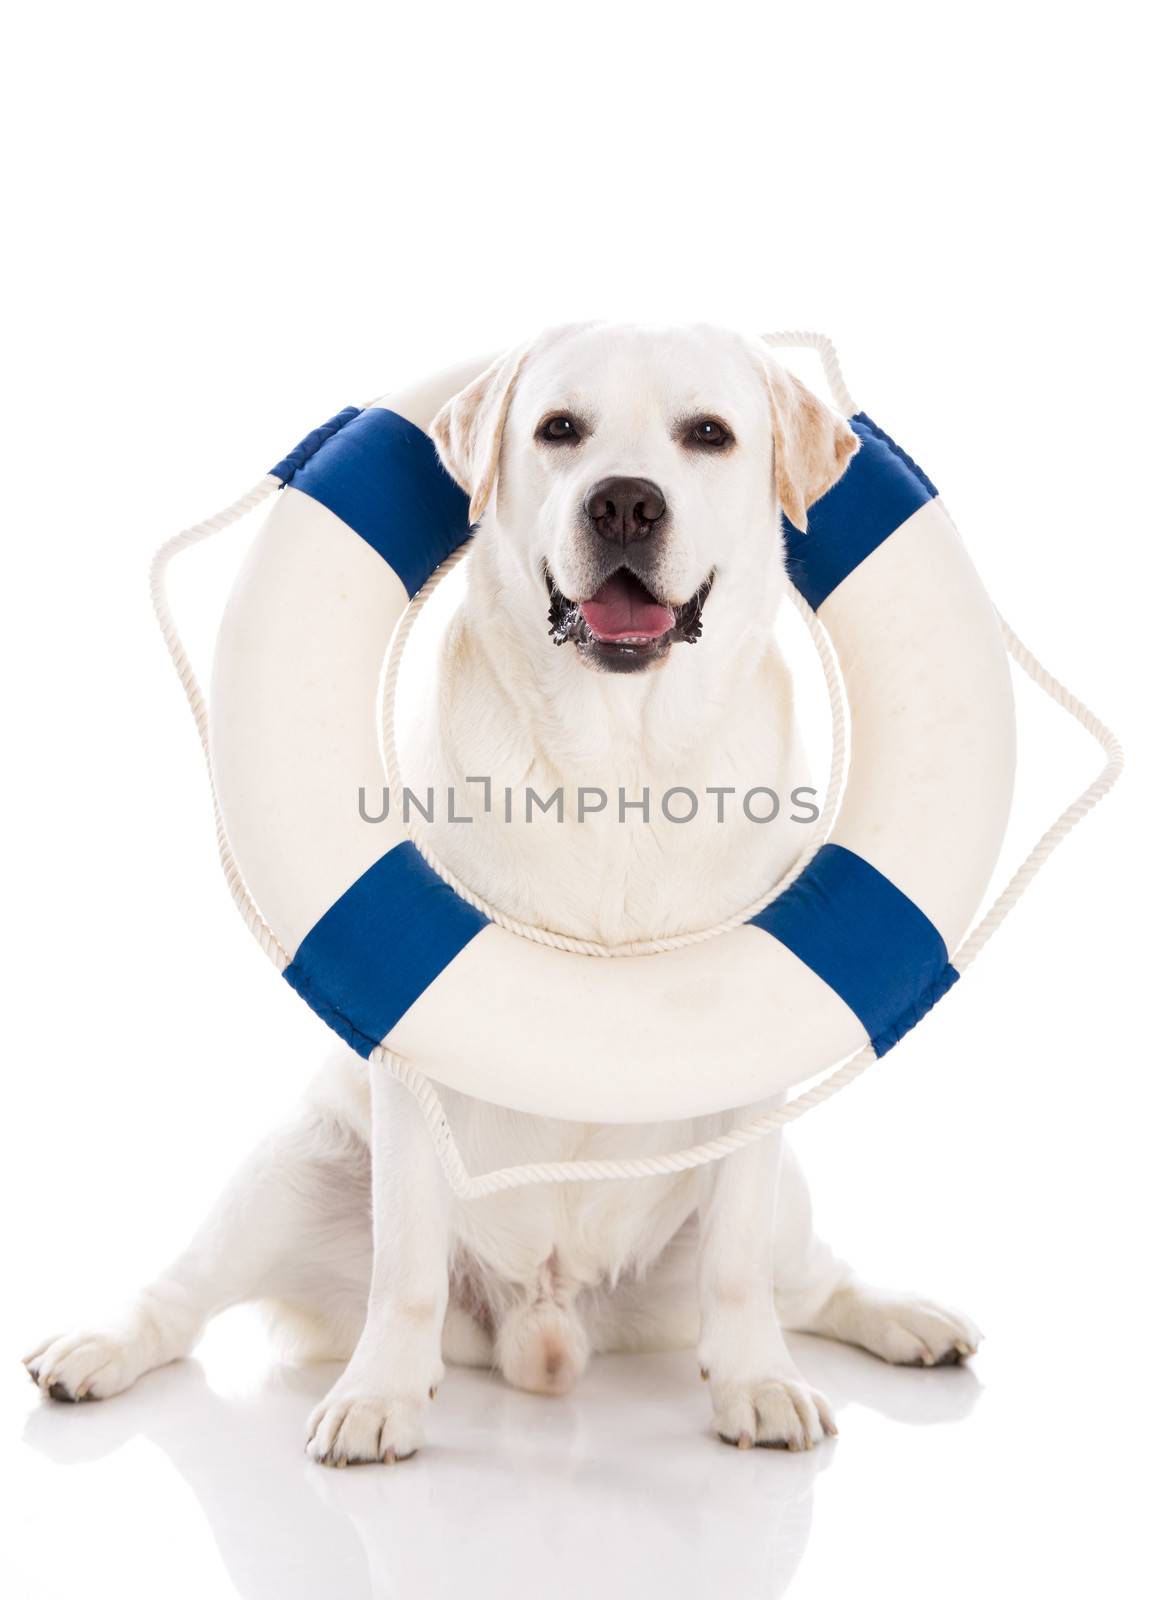 Labrador dog with a sailor buoy by Iko